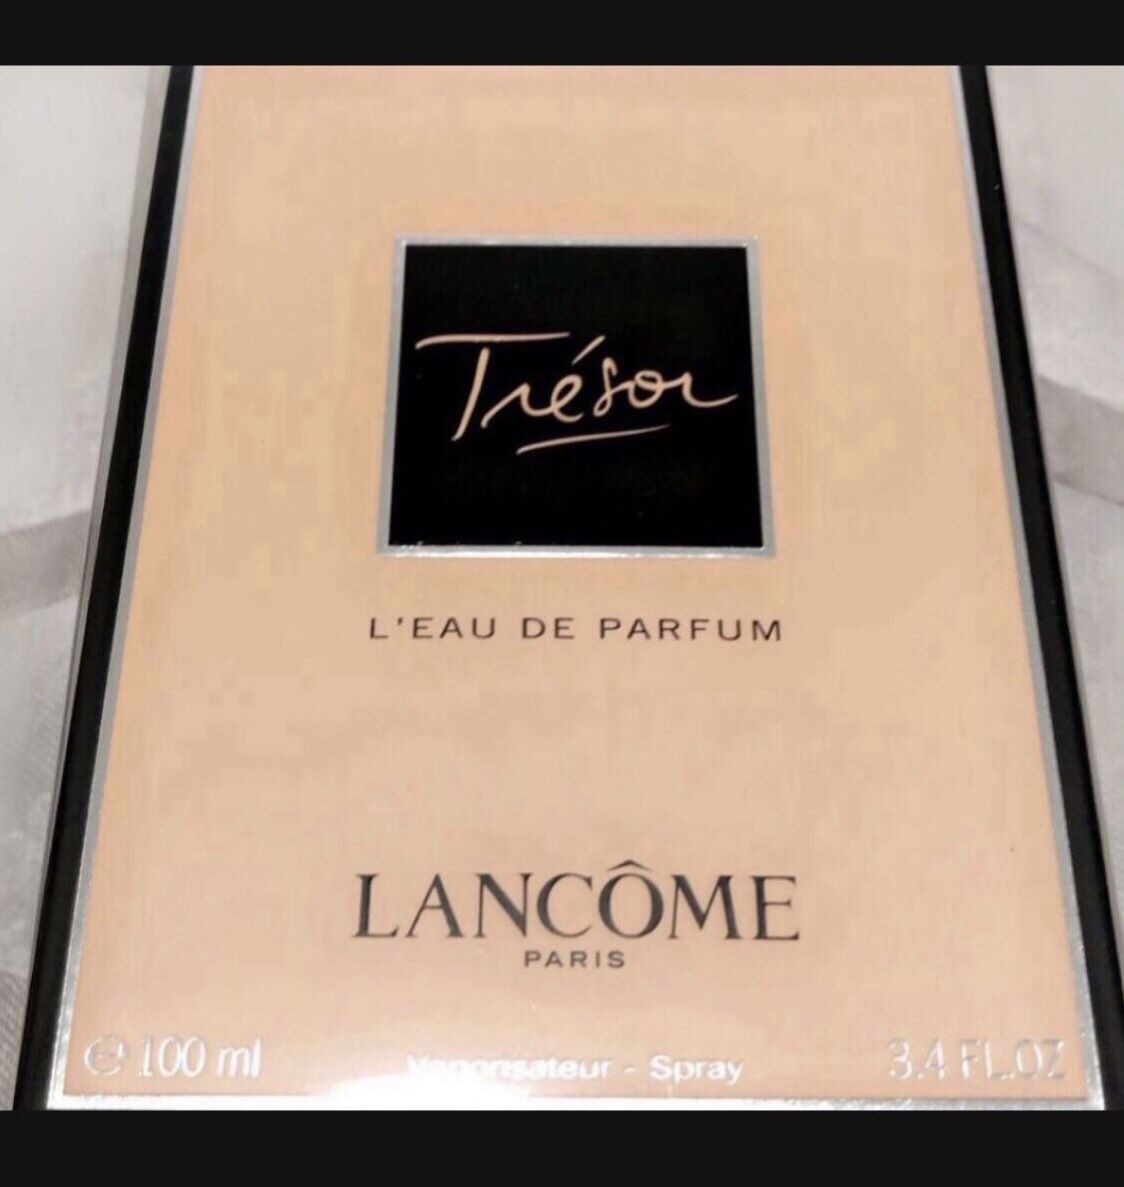 Tresor Lancome Perfume